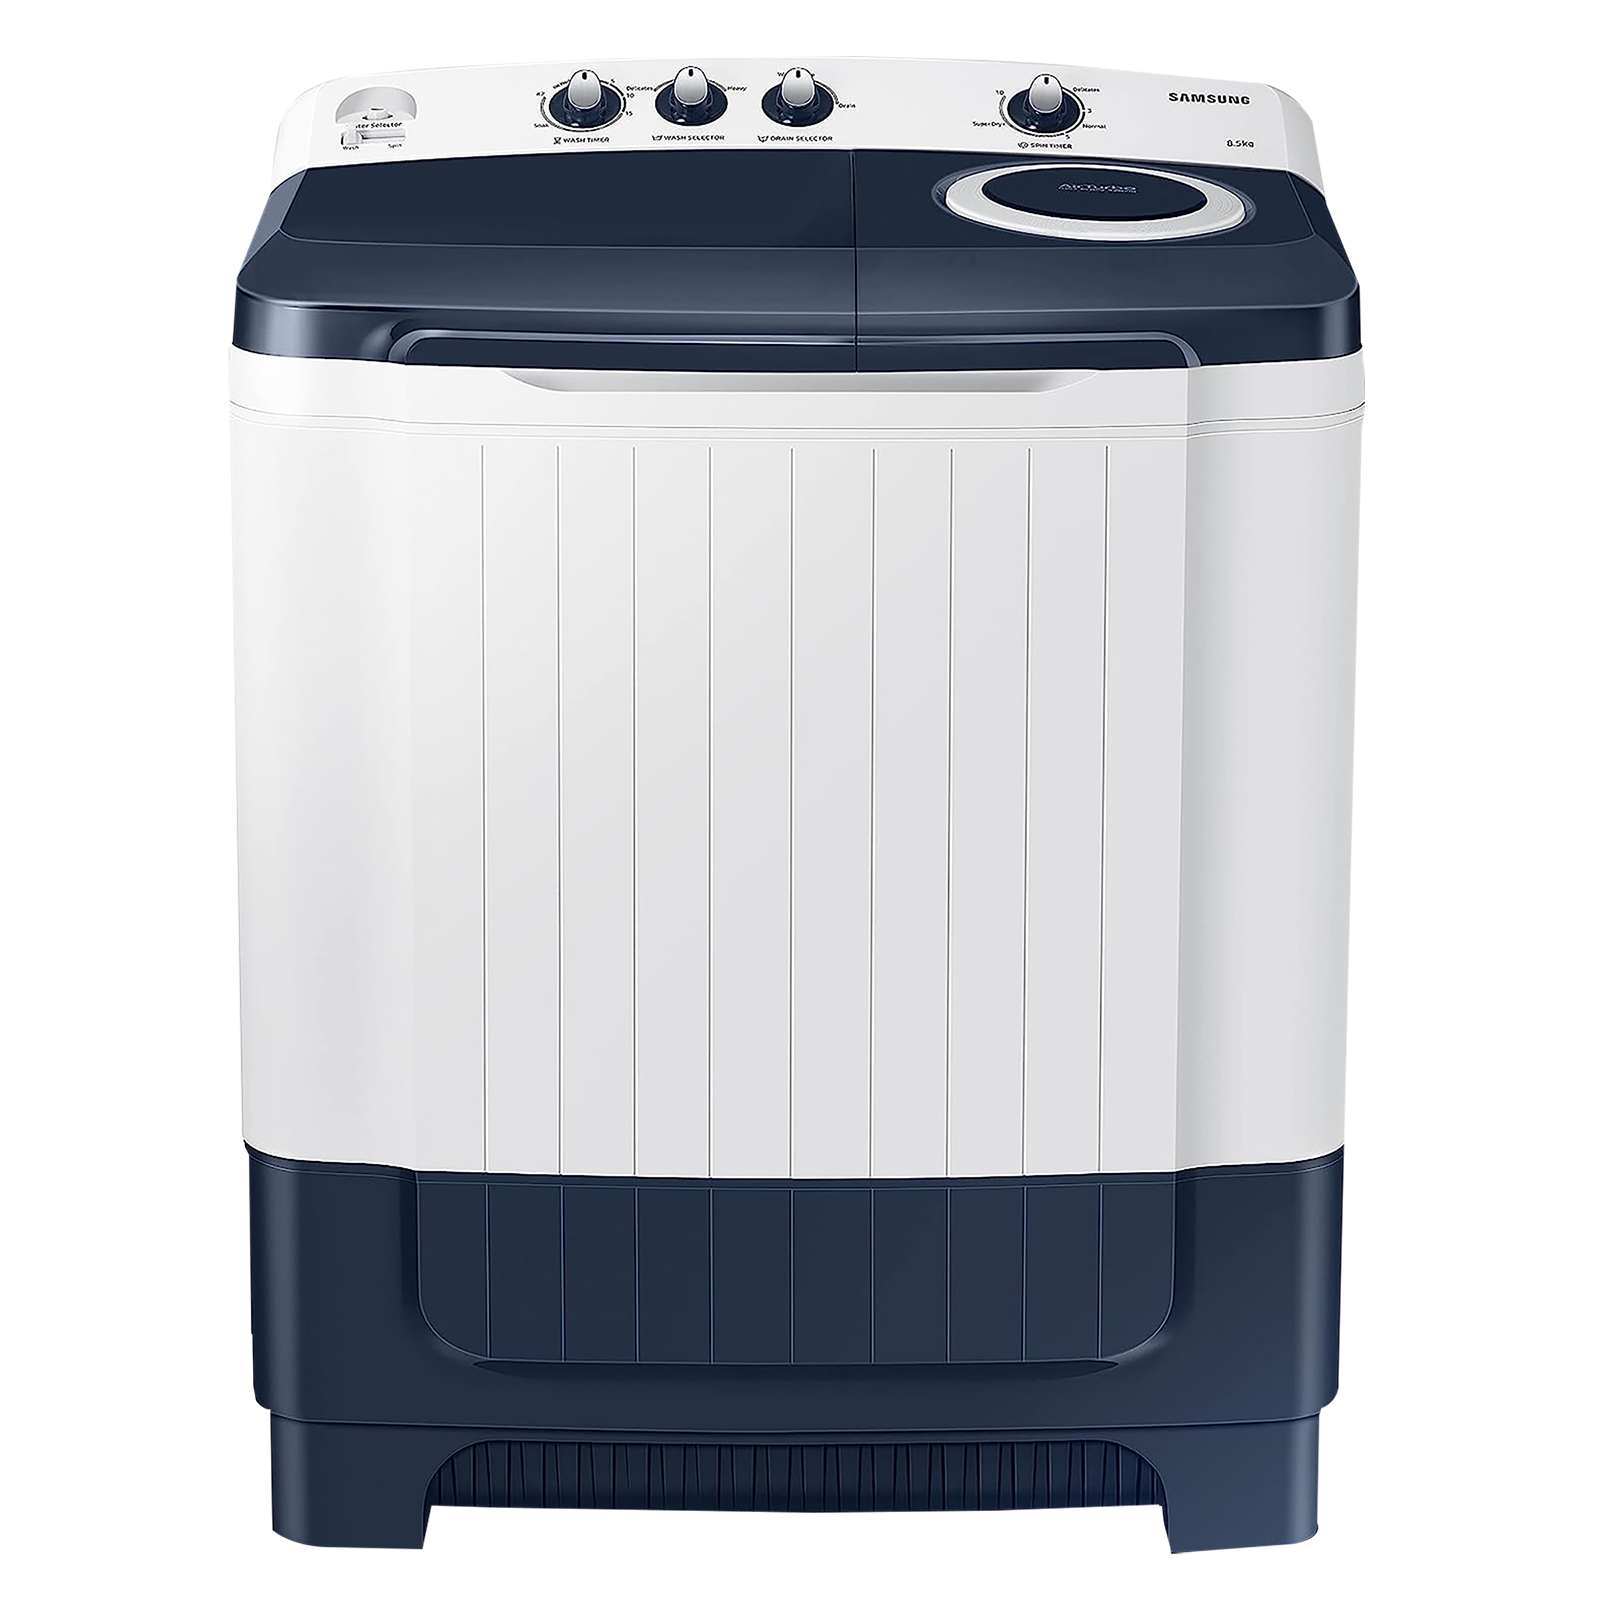 SAMSUNG 8.5 kg 5 Star Semi Automatic Washing Machine with Magic Filter (WT85R4000LL/TL, Light Grey)